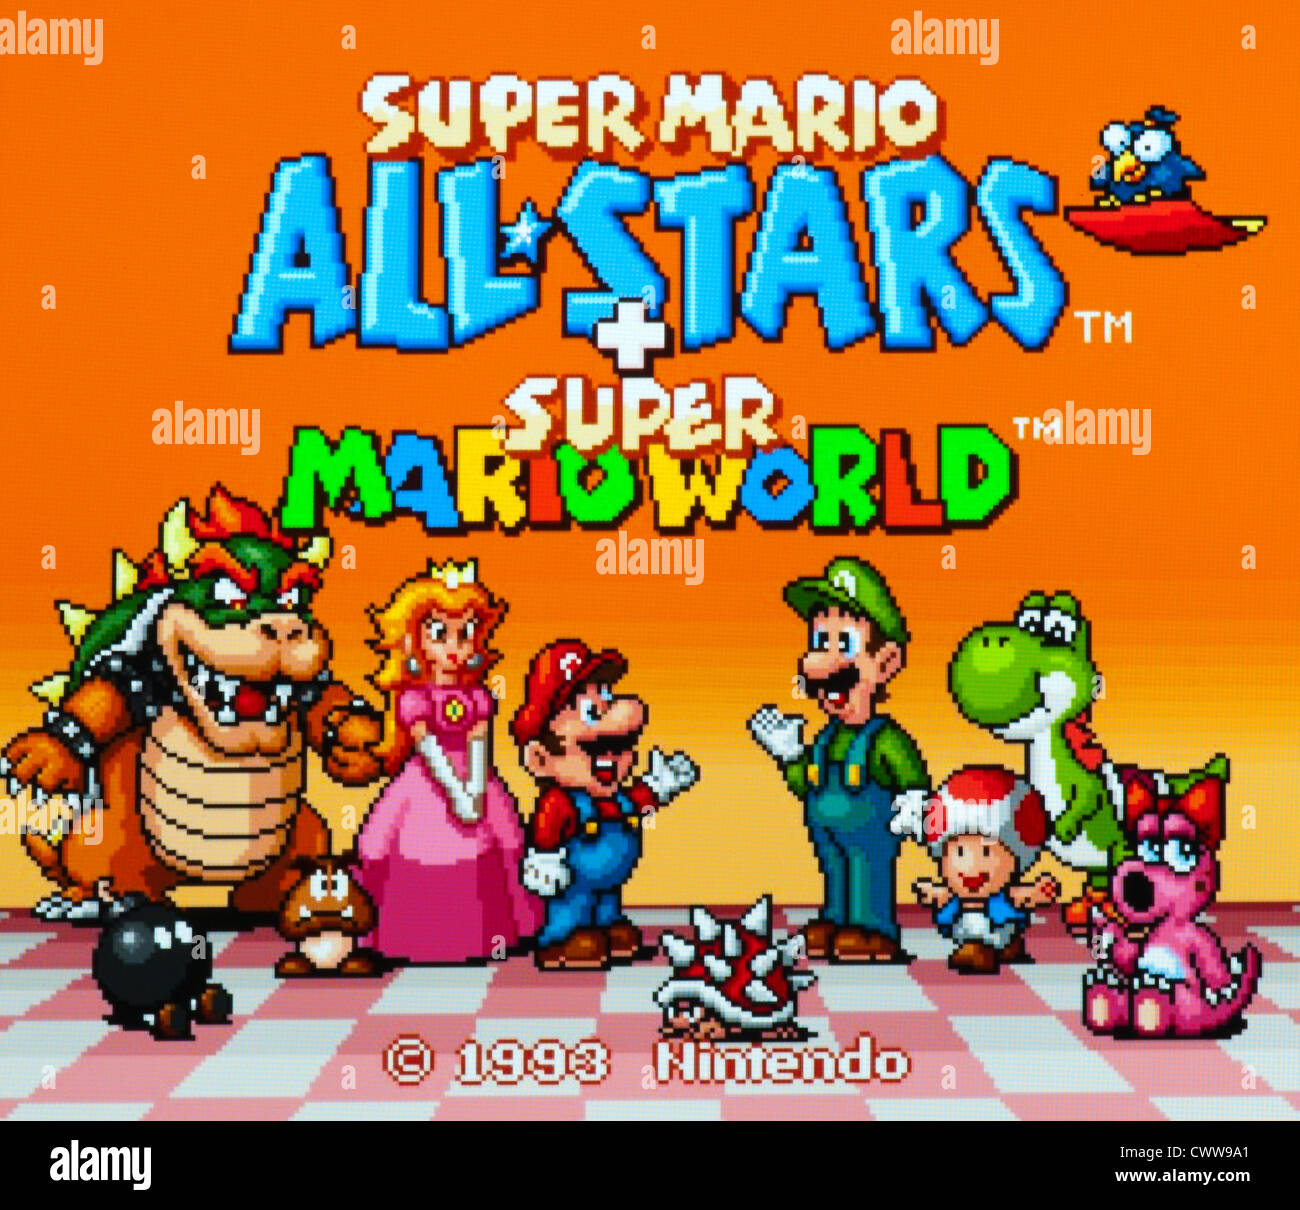 Super Mario All stars video game - title screen Stock Photo - Alamy